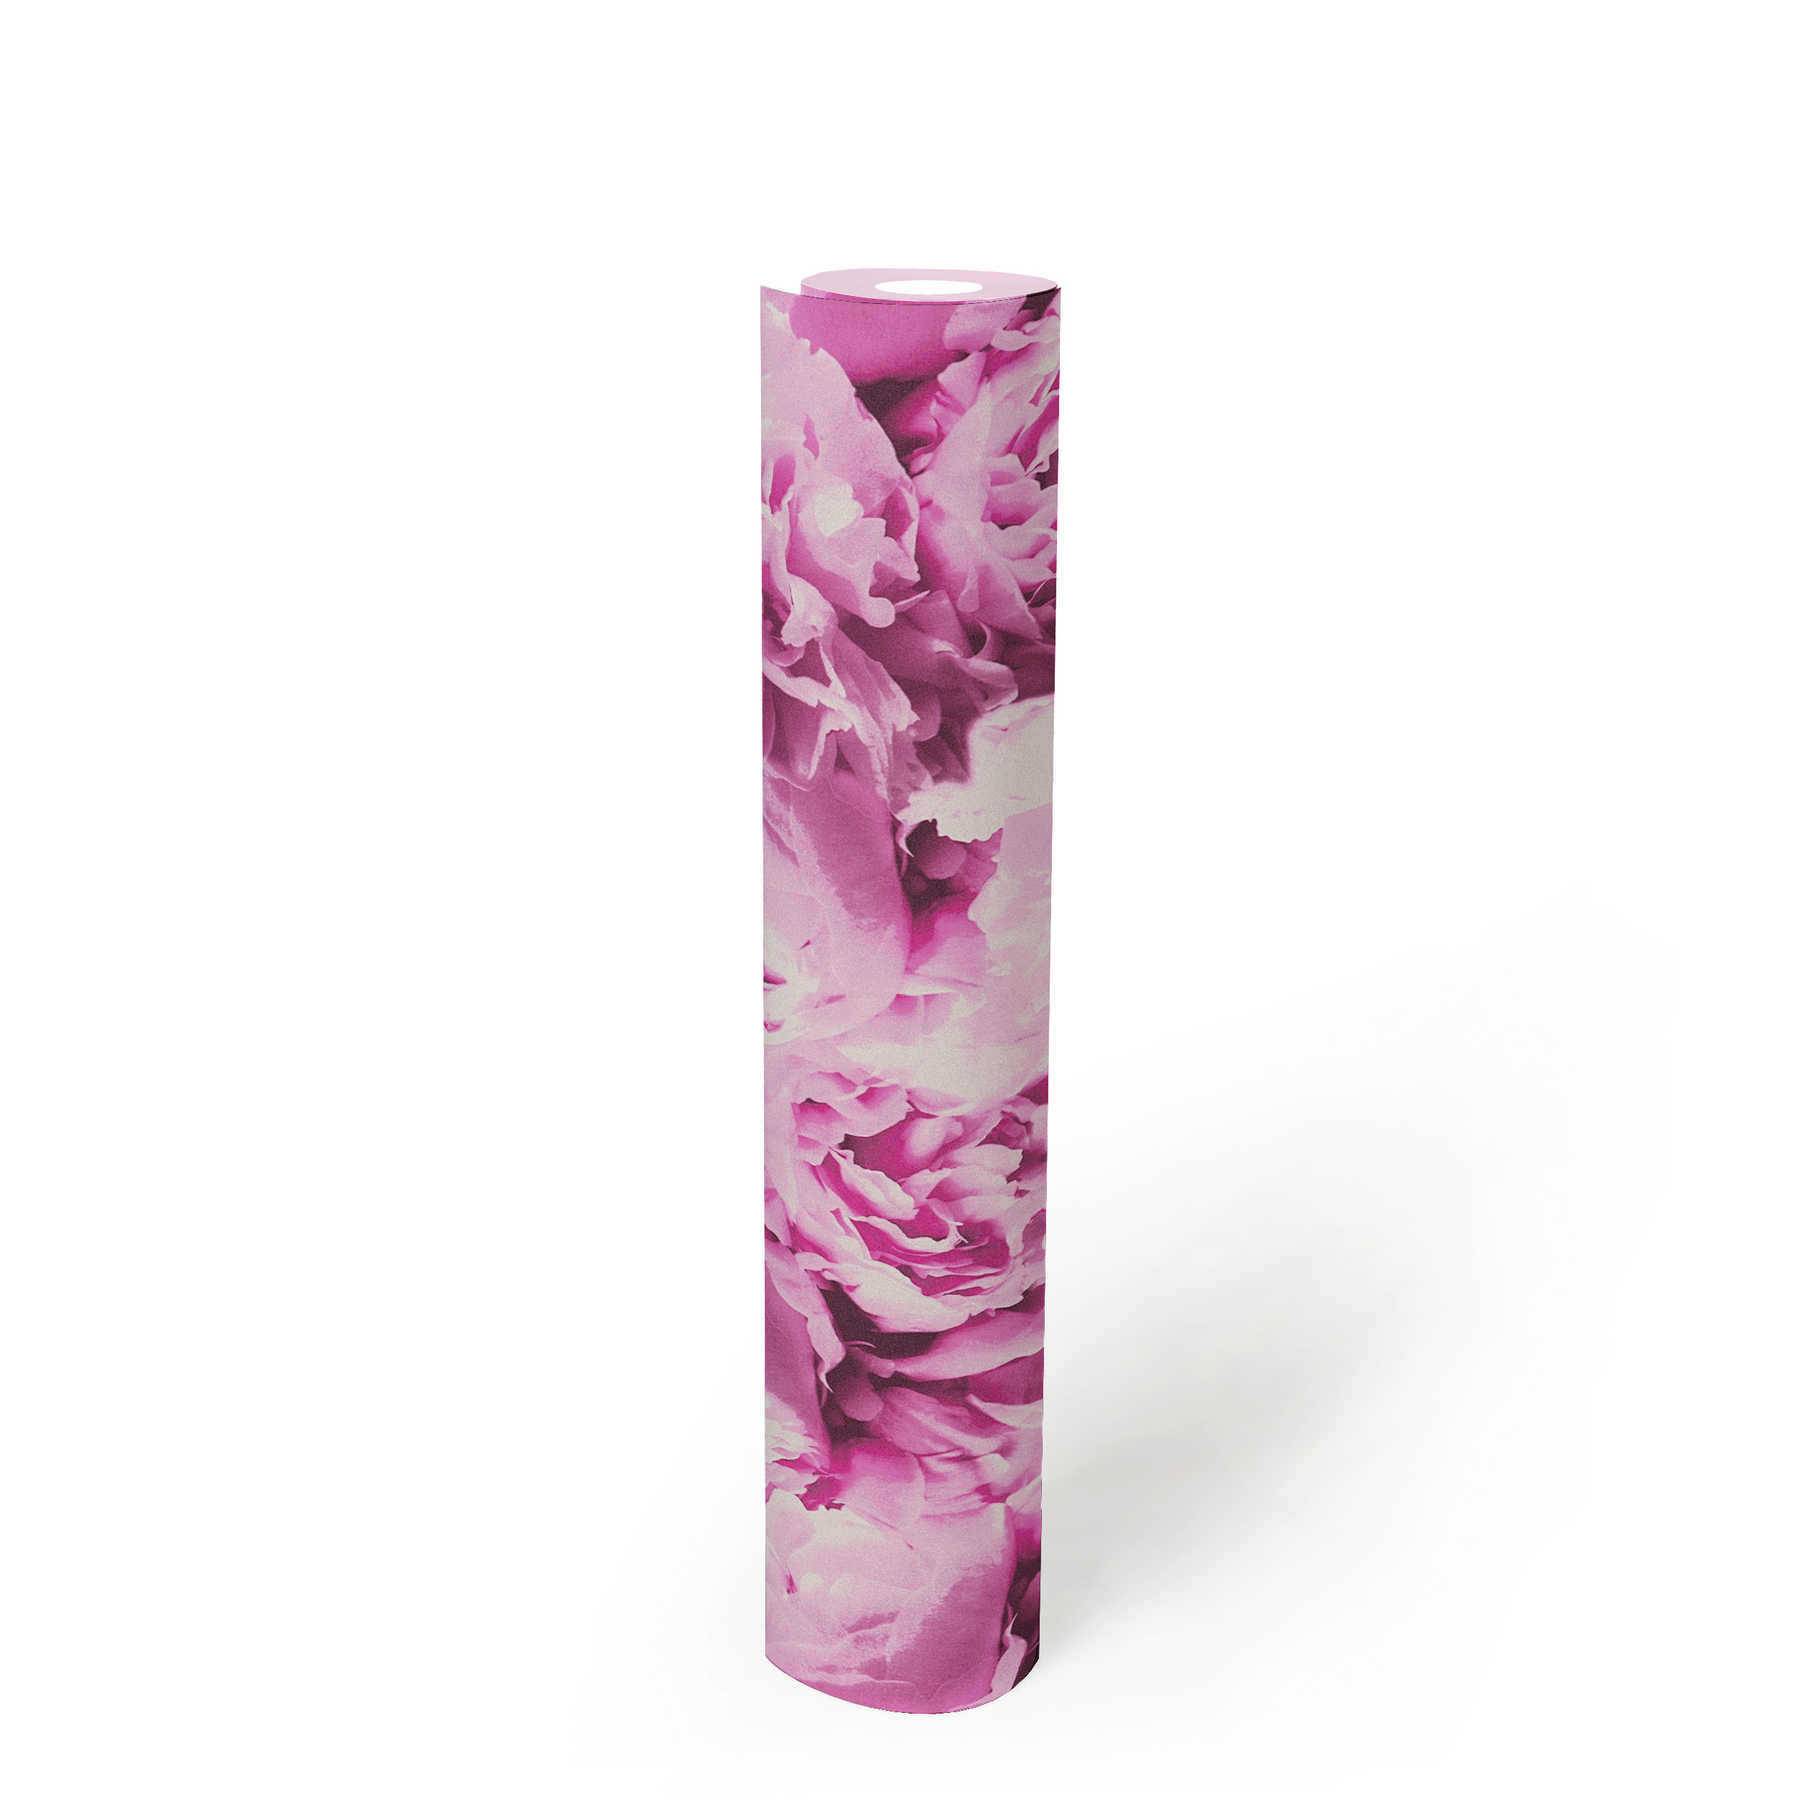             Blumentapete Rosen mit Schimmer Effekt – Rosa
        